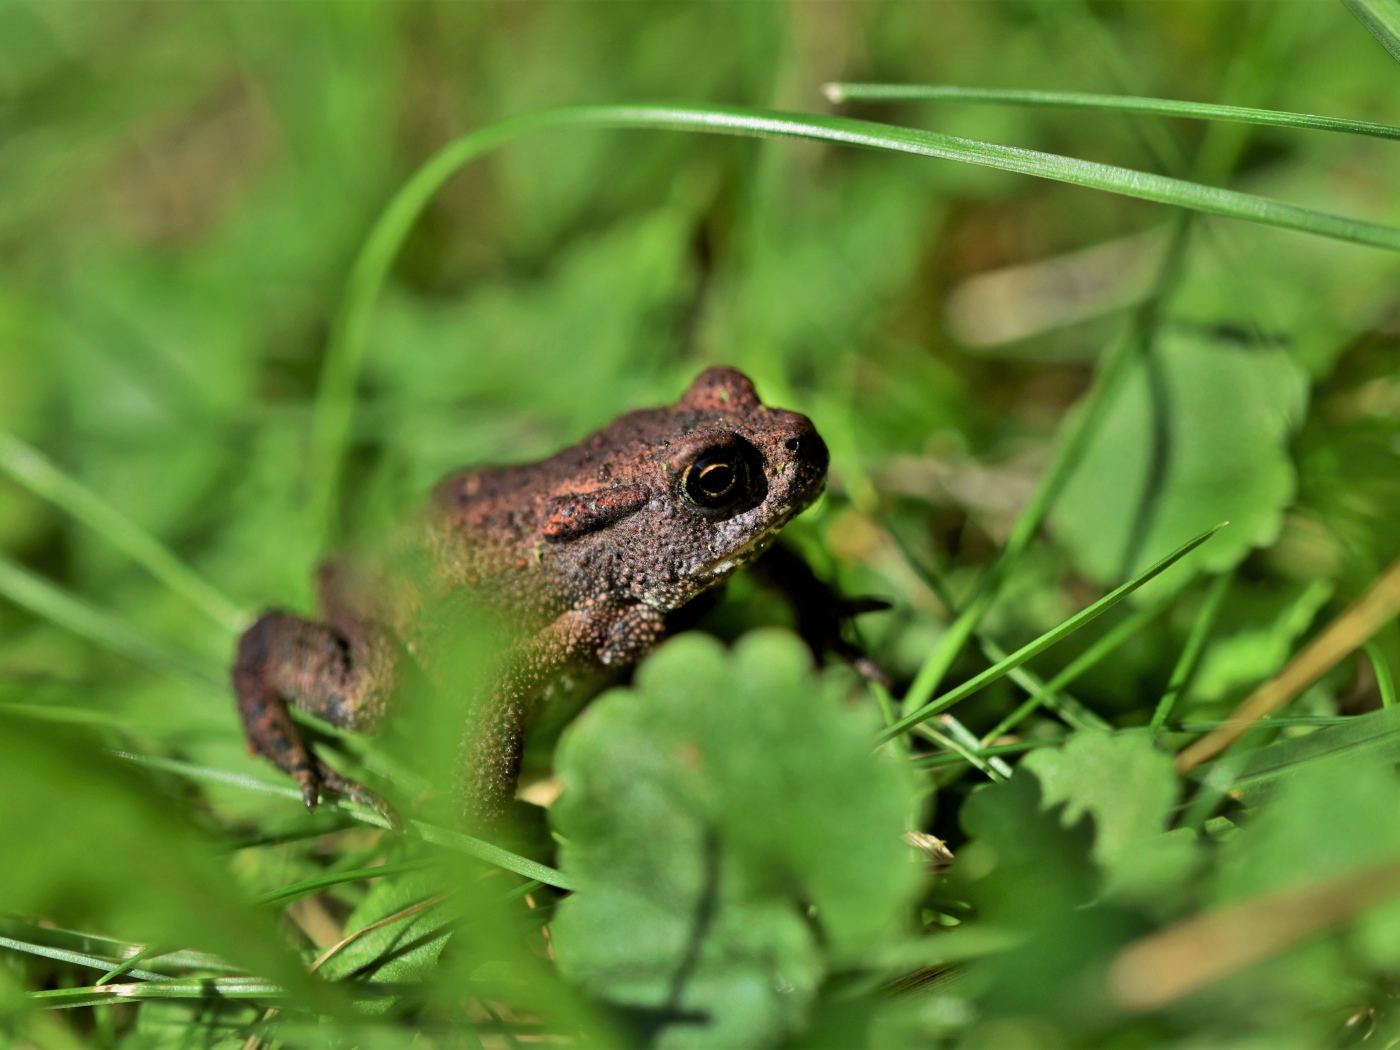 Big frog sitting in green grass